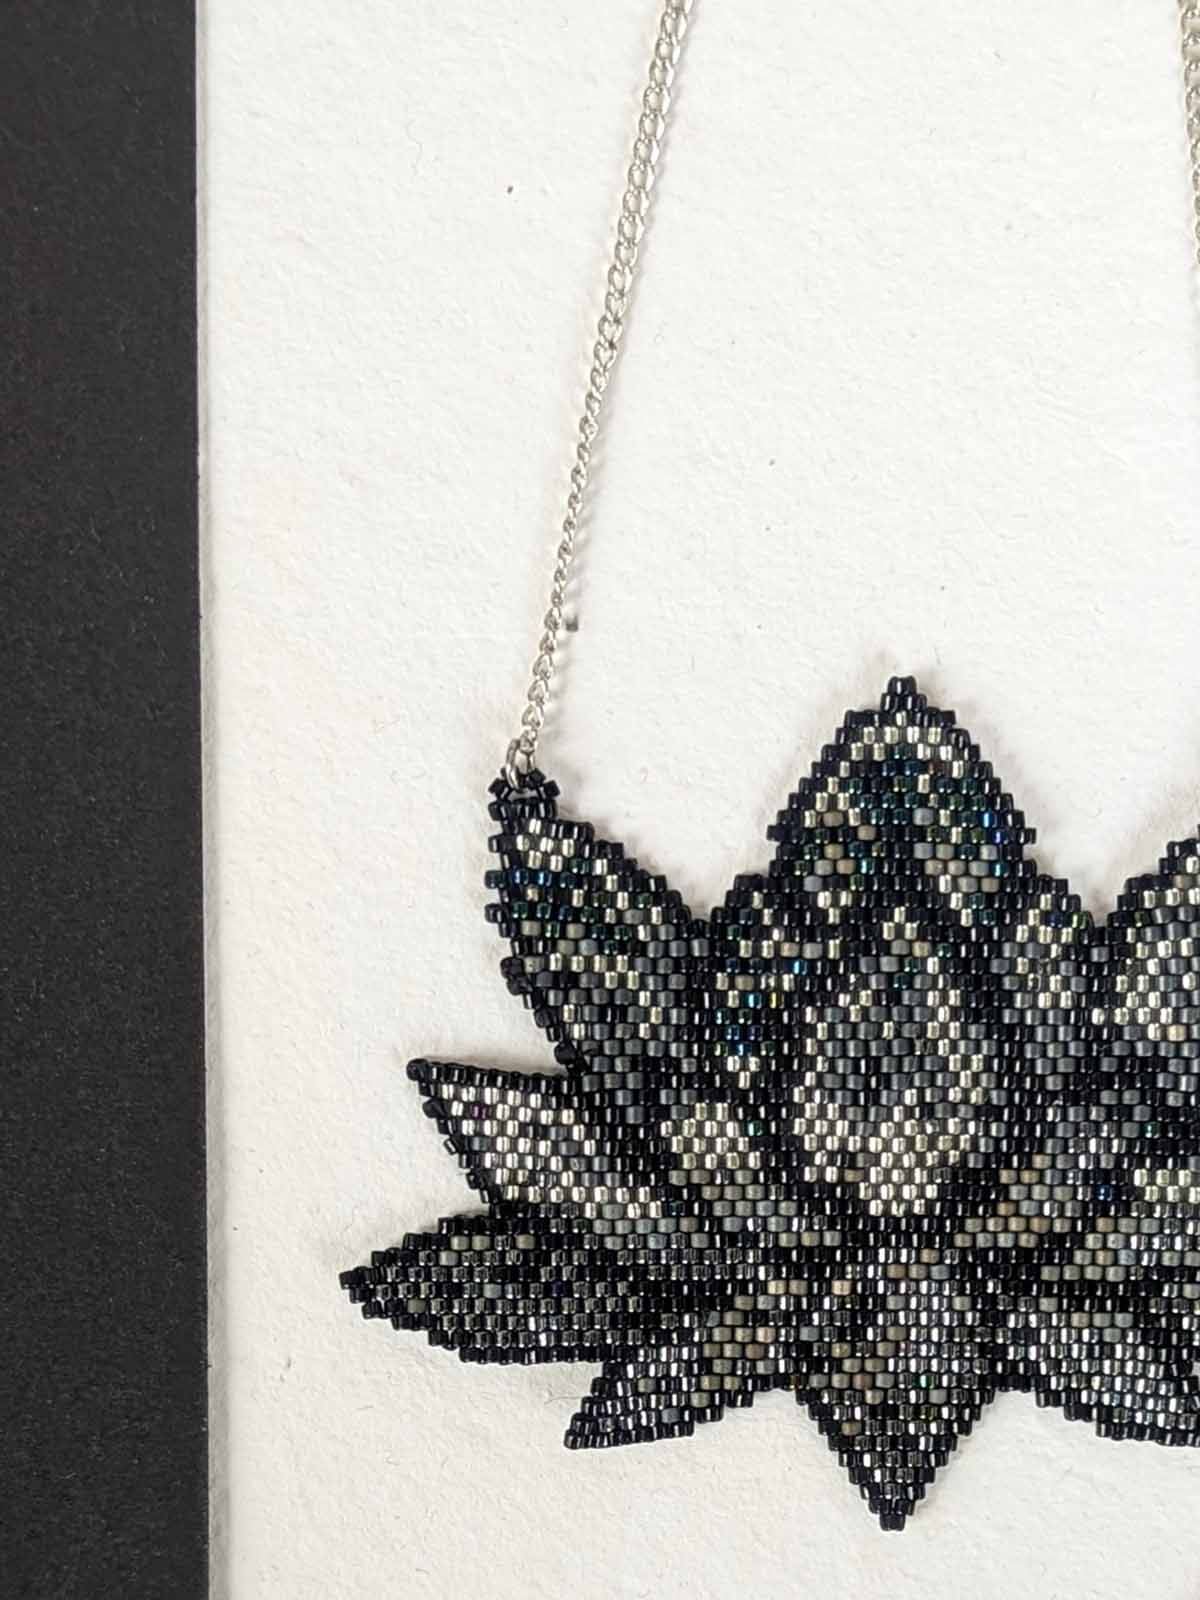 Buy LA BELLEZA Gun Black Crystal Rhinestone Necklace Neckpiece Mala For  Girls and Women at Amazon.in